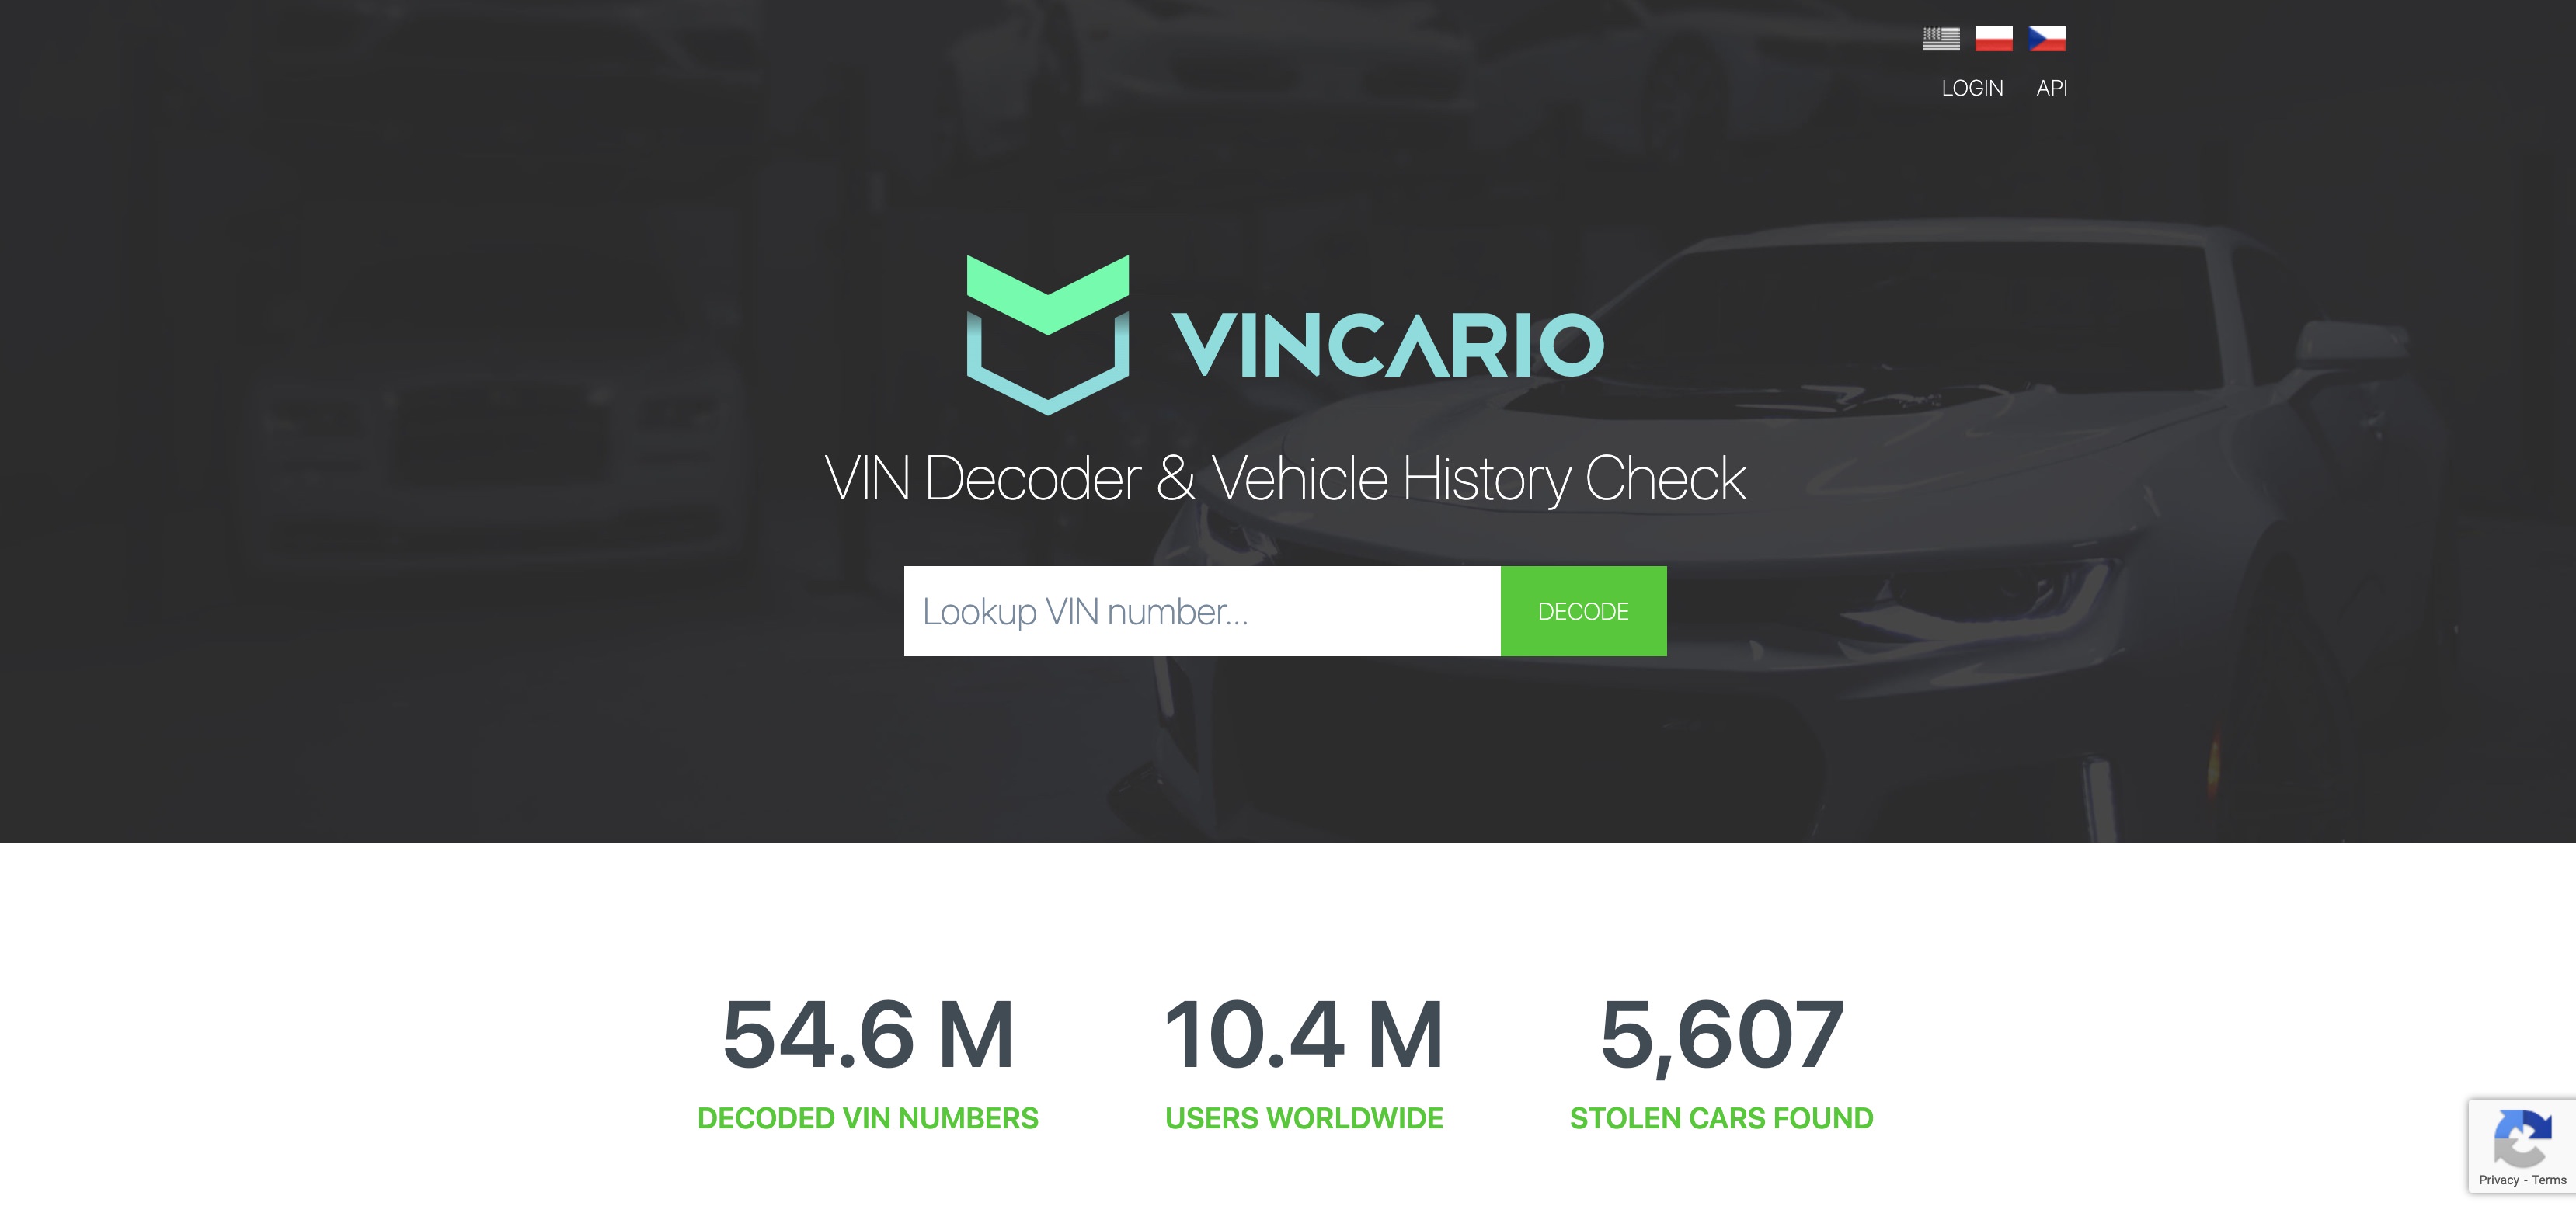 homepage overview of car history website Vindecoder